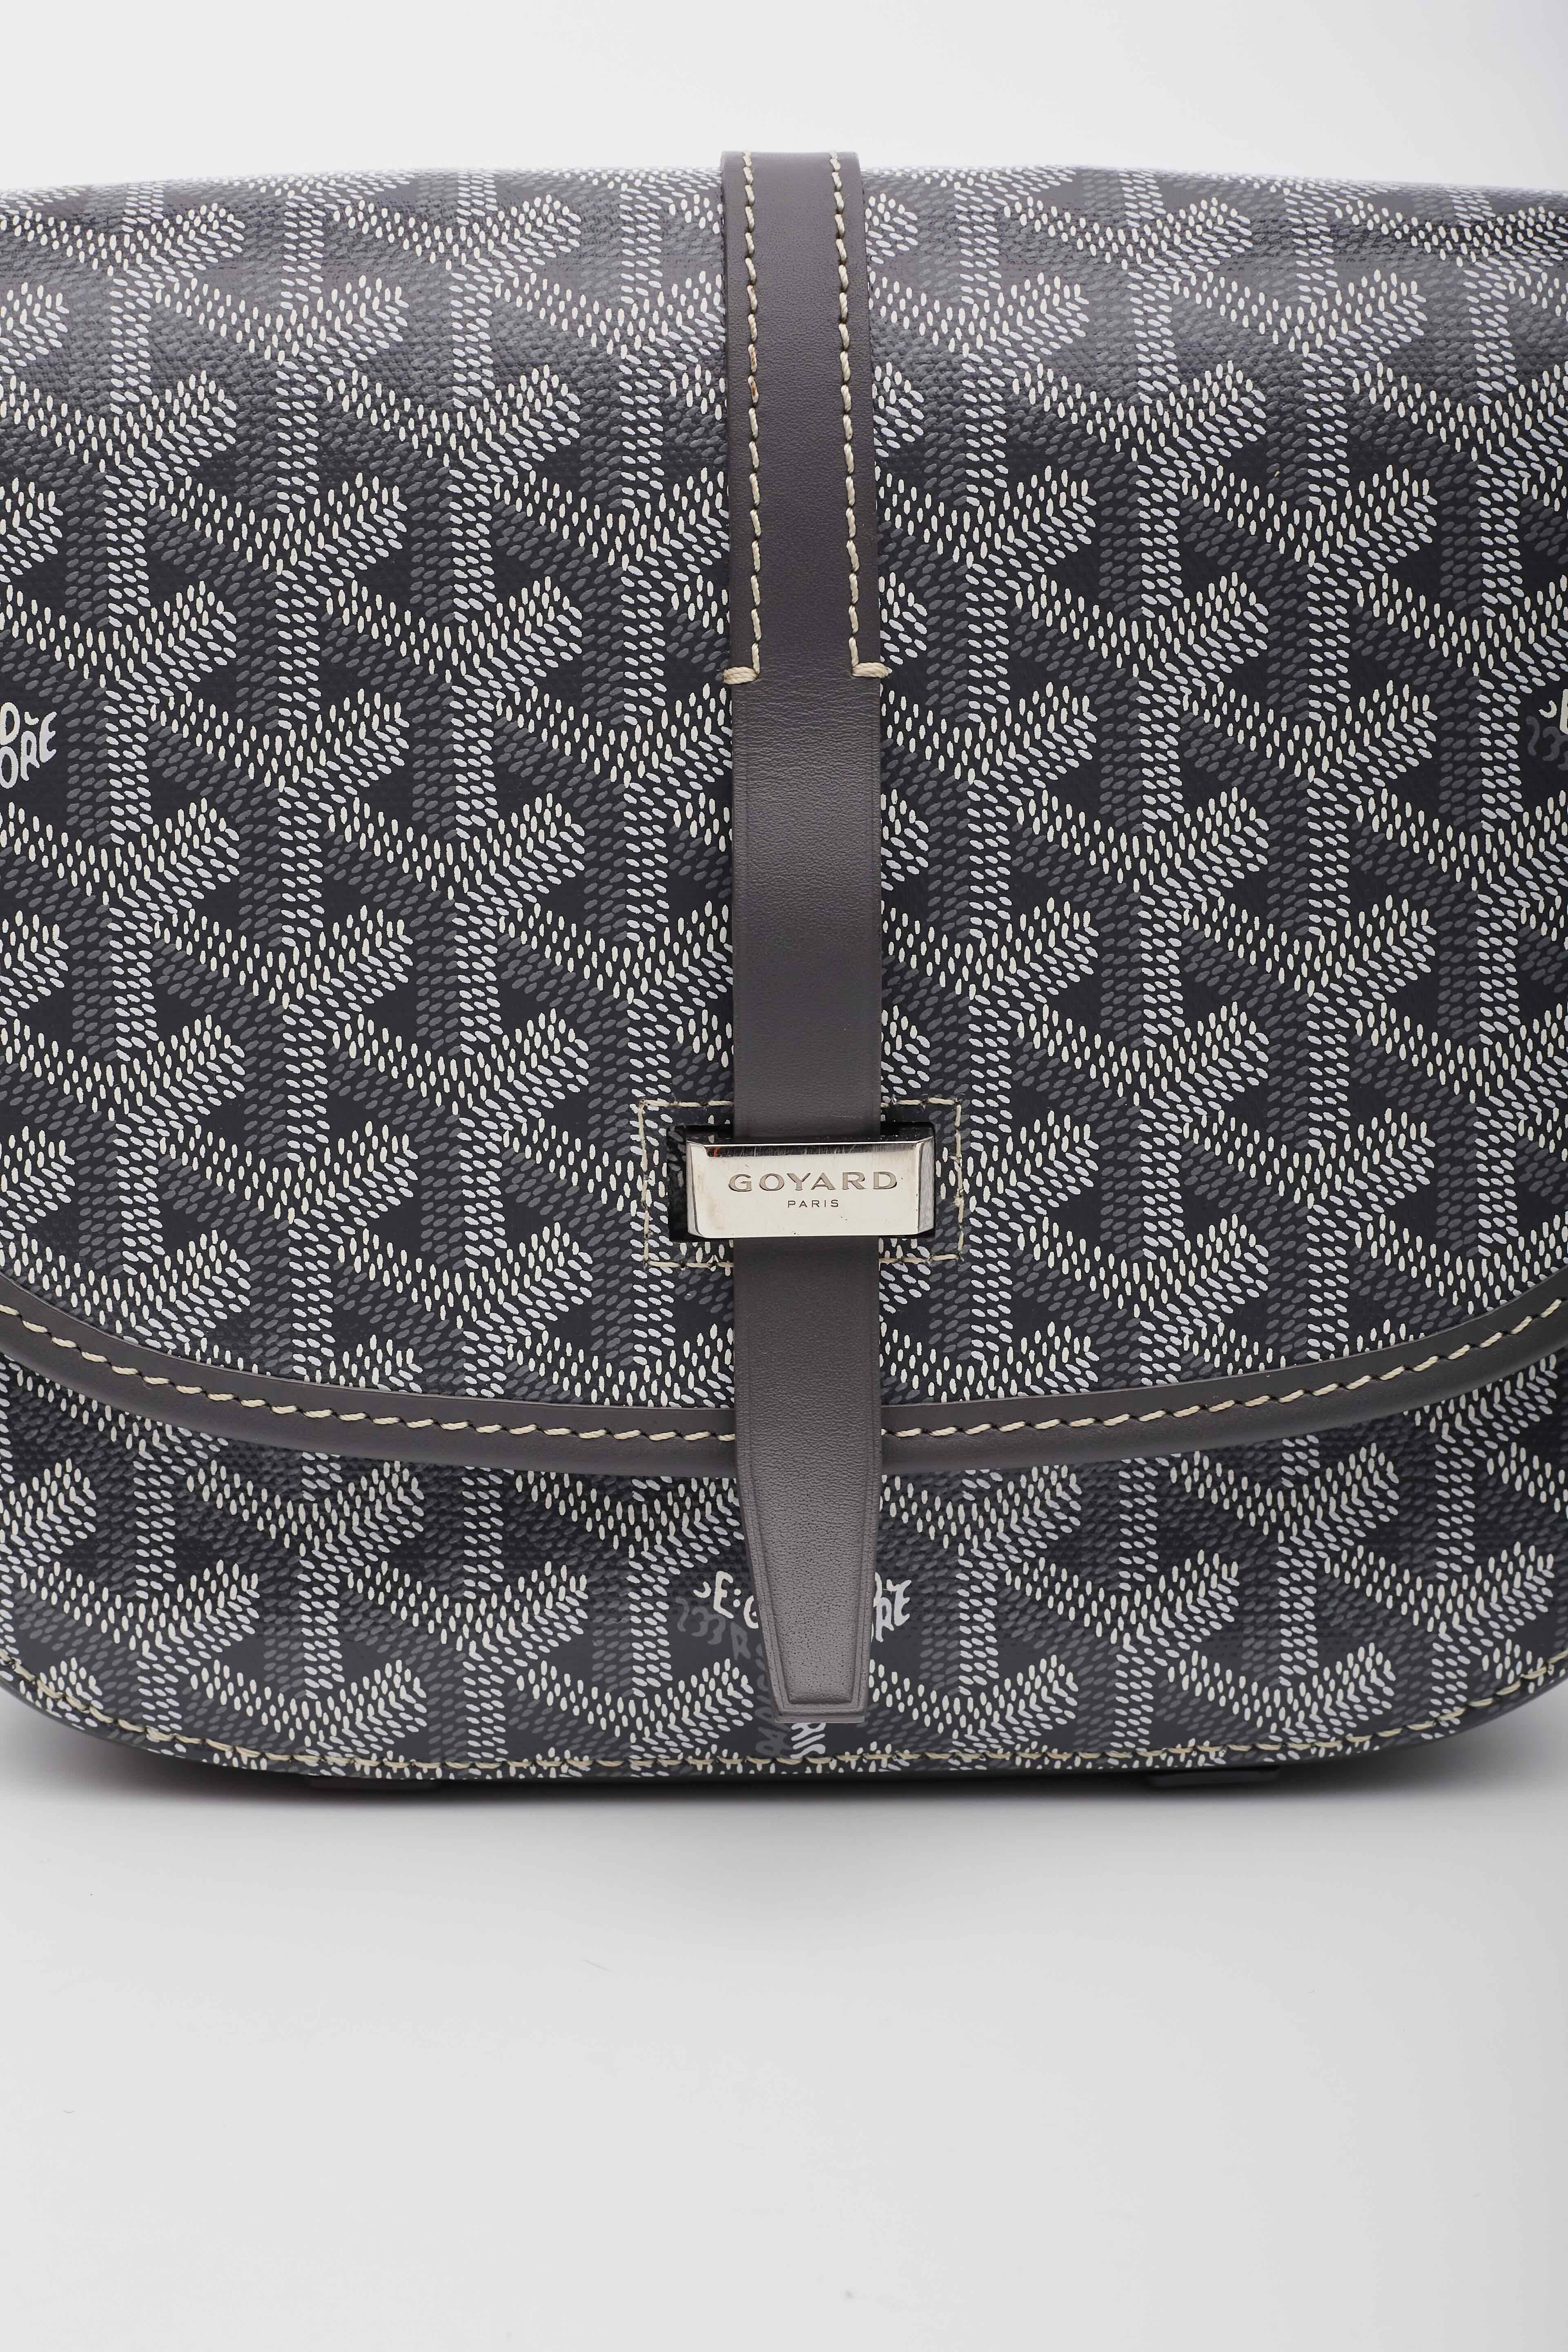 Women's Goyard Belvedere Pm Grey Shoulder Bag